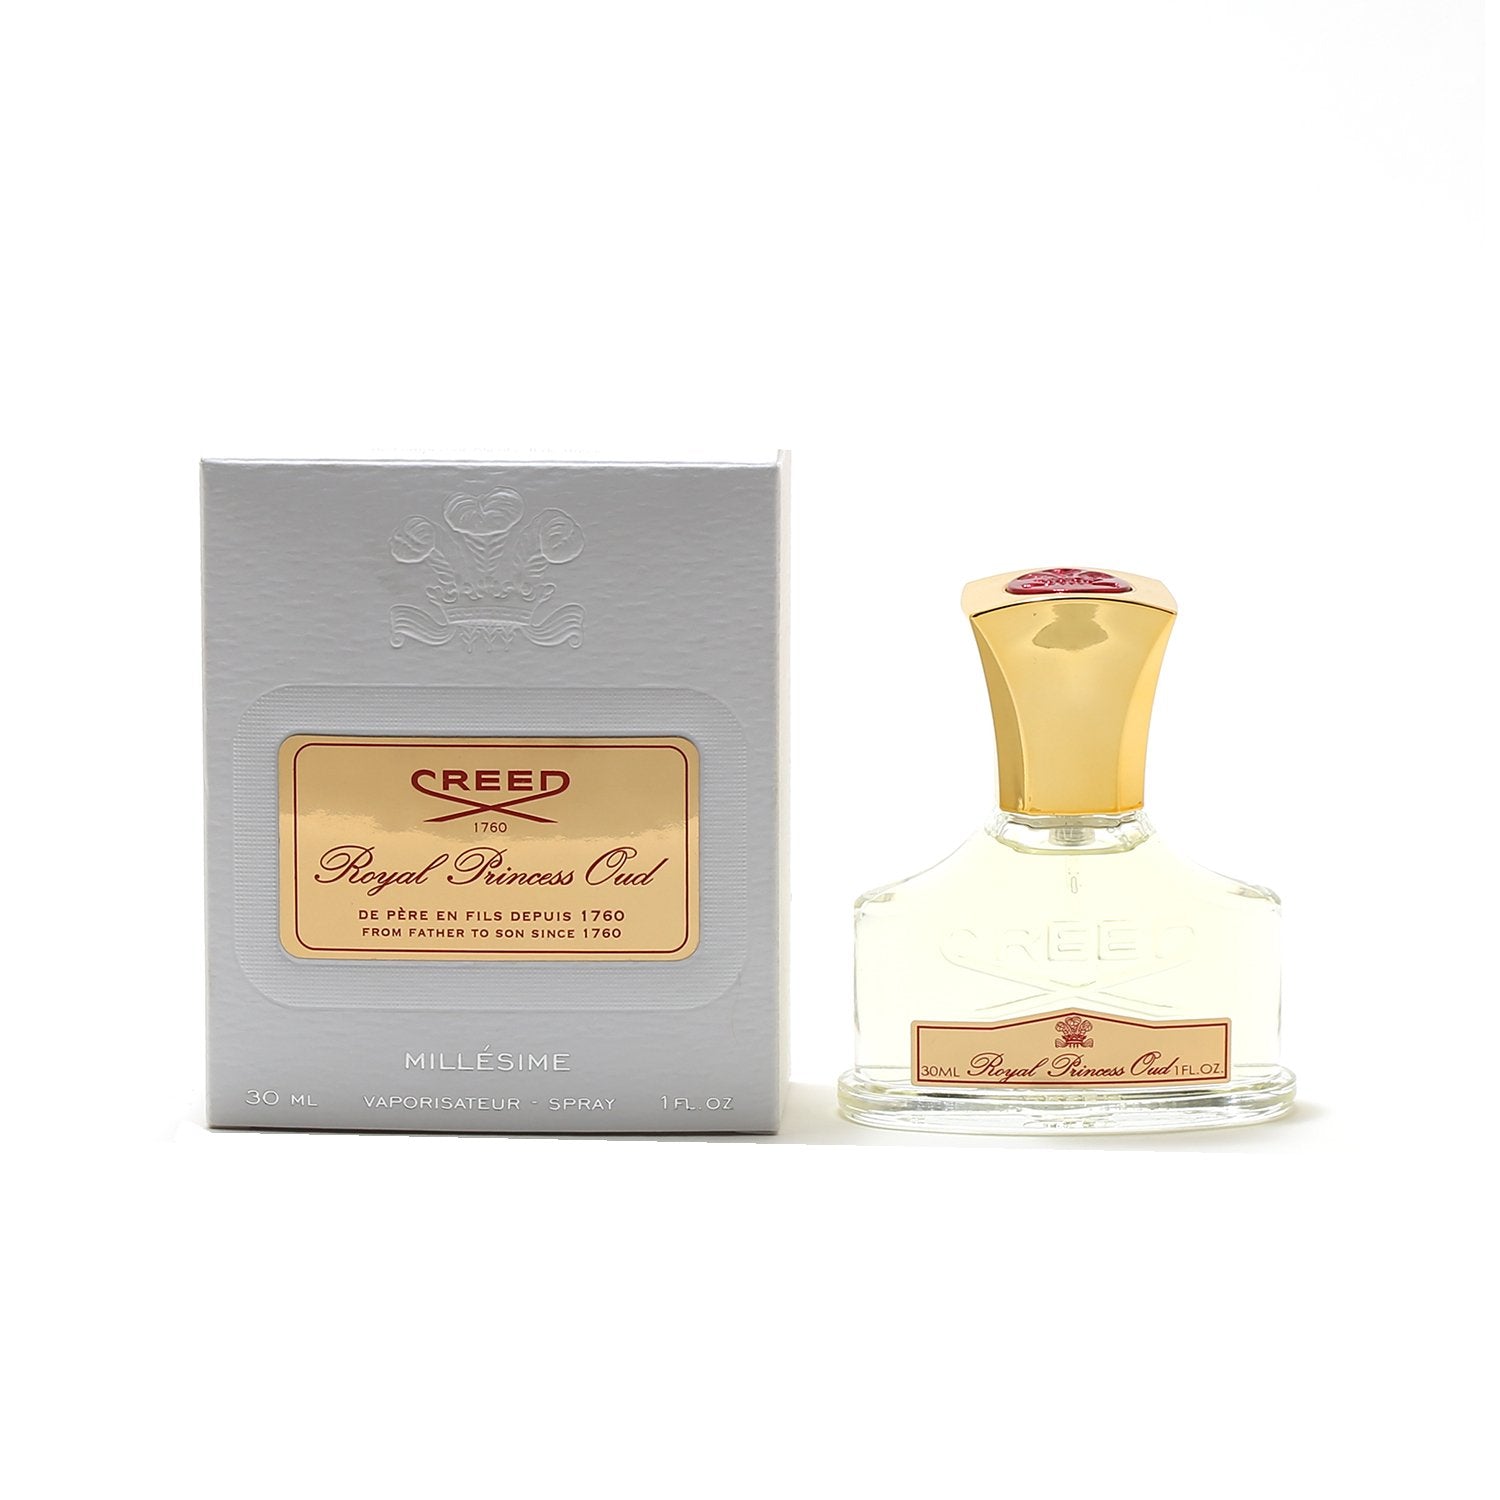 Perfume - CREED ROYAL PRINCESS OUD FOR WOMEN - EAU DE PARFUM SPRAY, 1 OZ